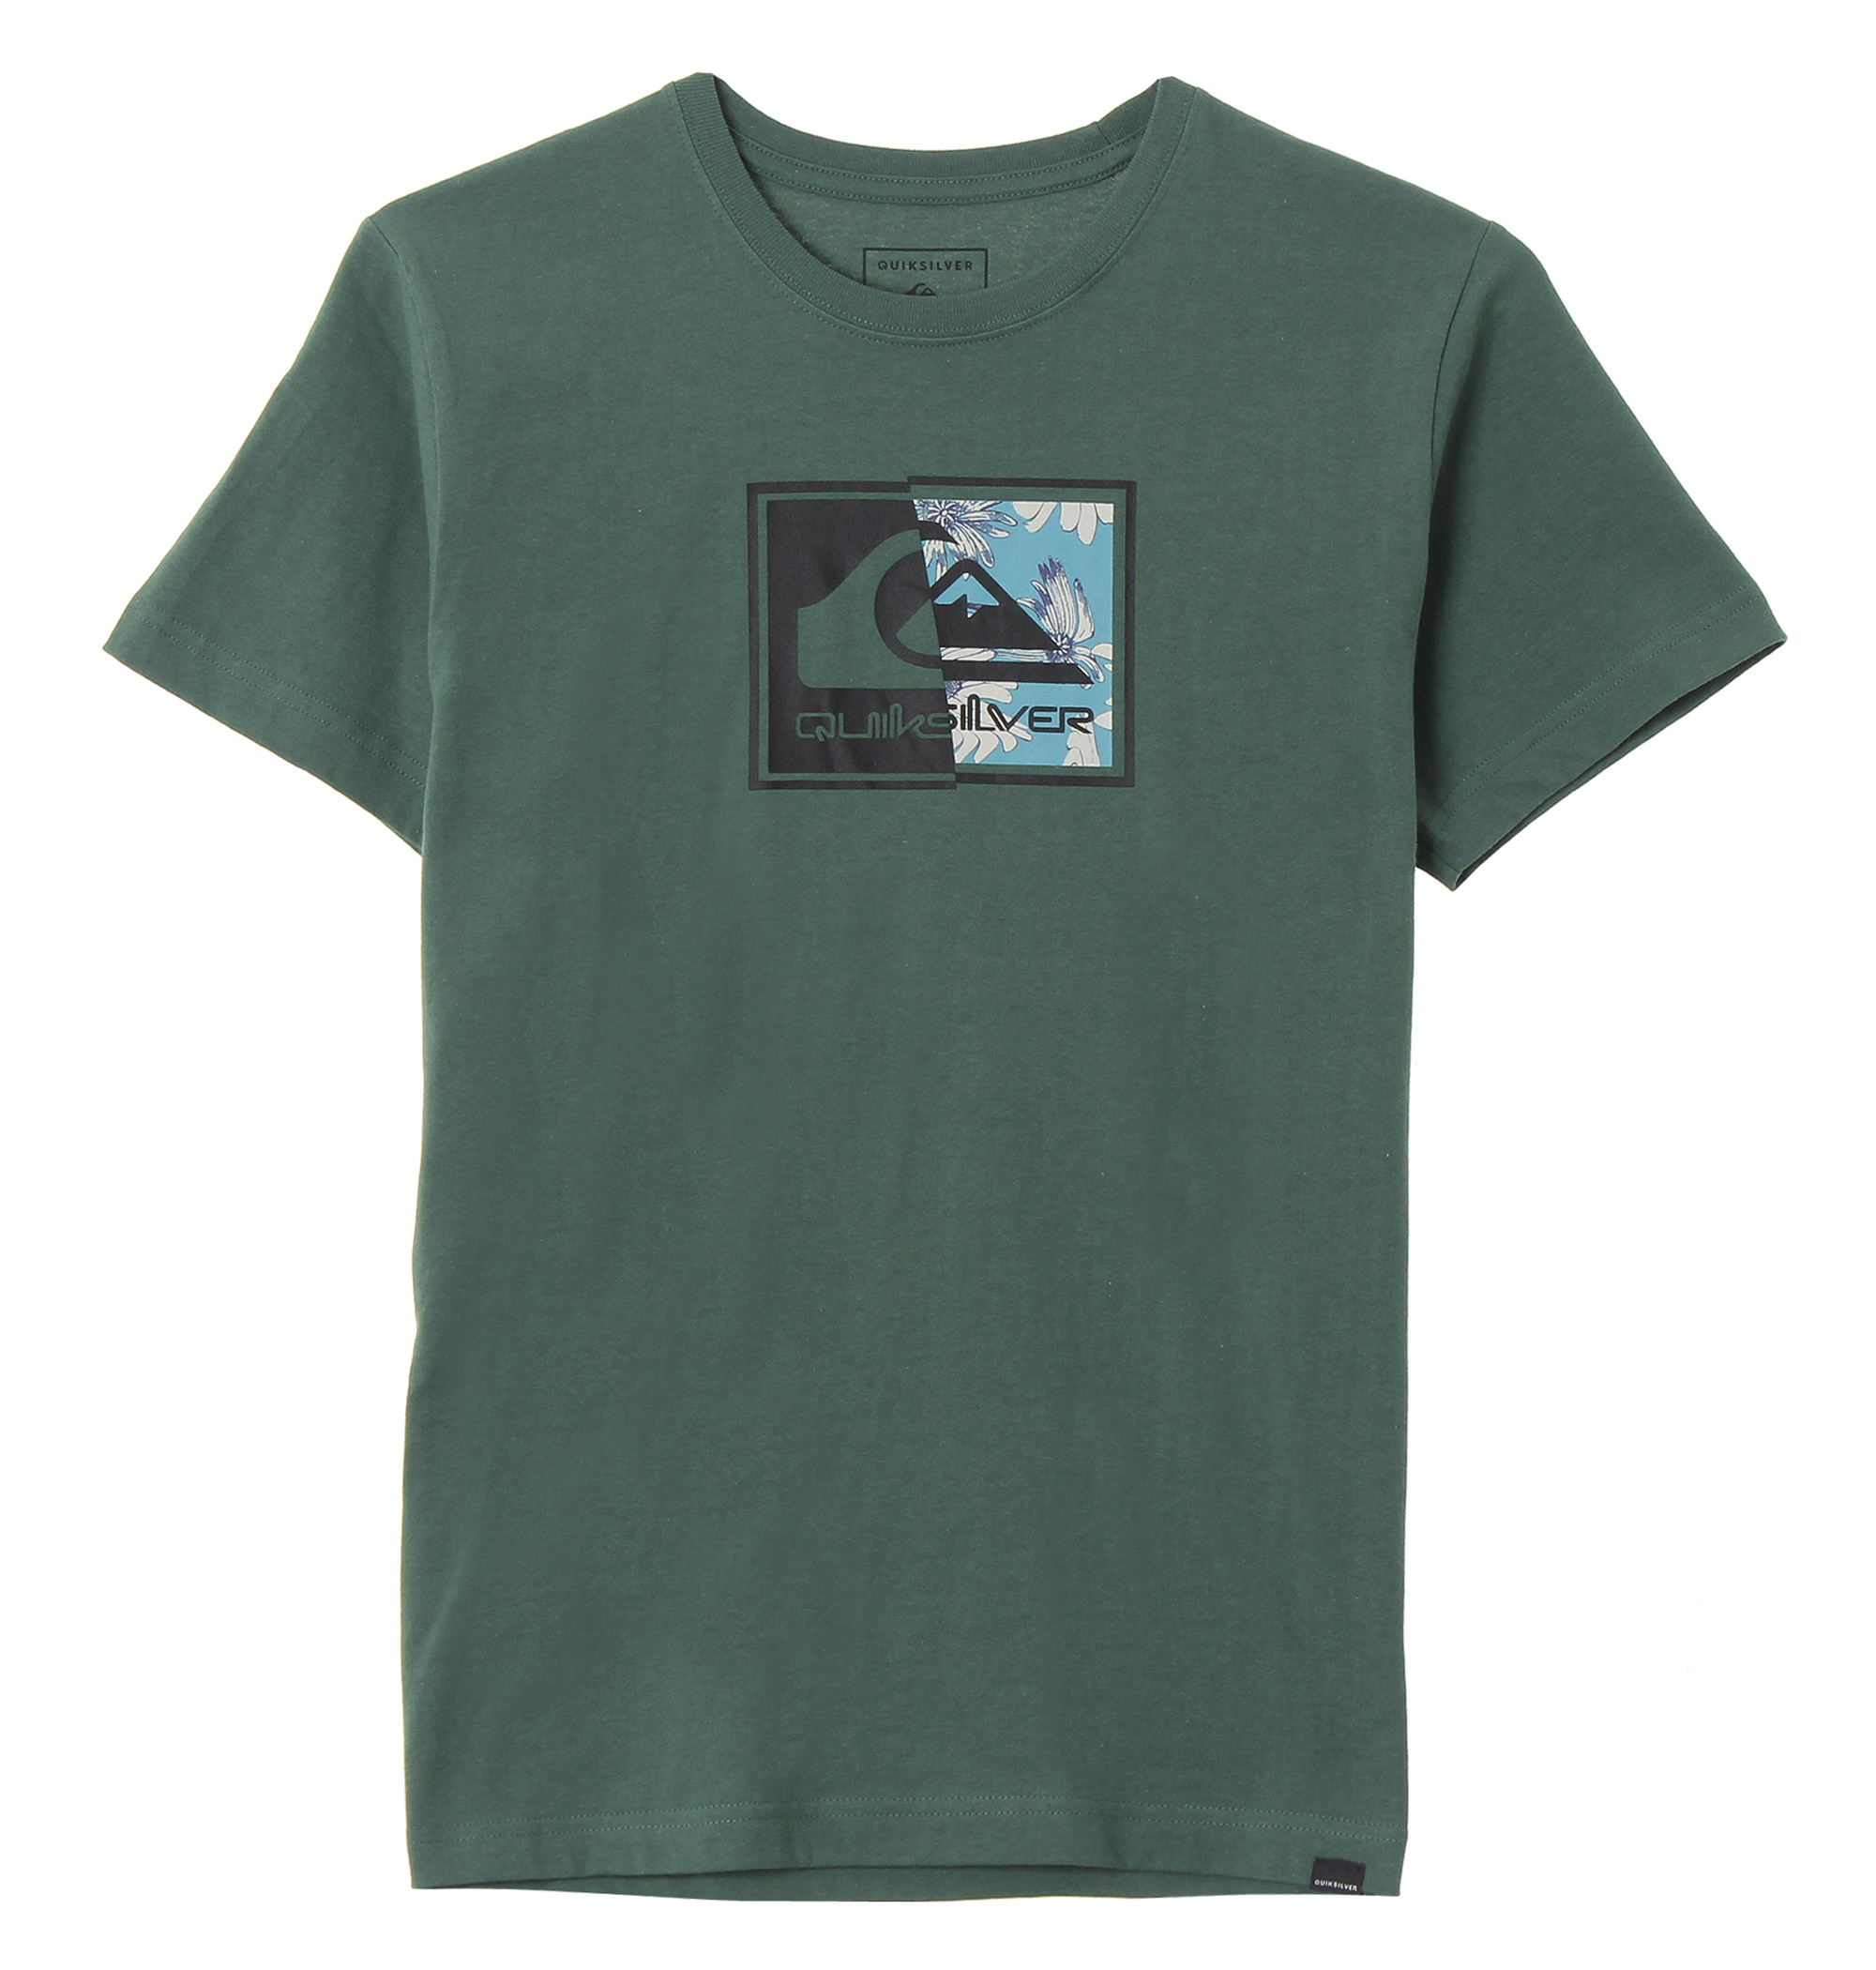 35%OFF！ FRACTAL LOGO ST バイカラー×ボタニカル柄のブランドアイコンを組み合わせた斬新なデザインに視線が集まる半袖Tシャツ